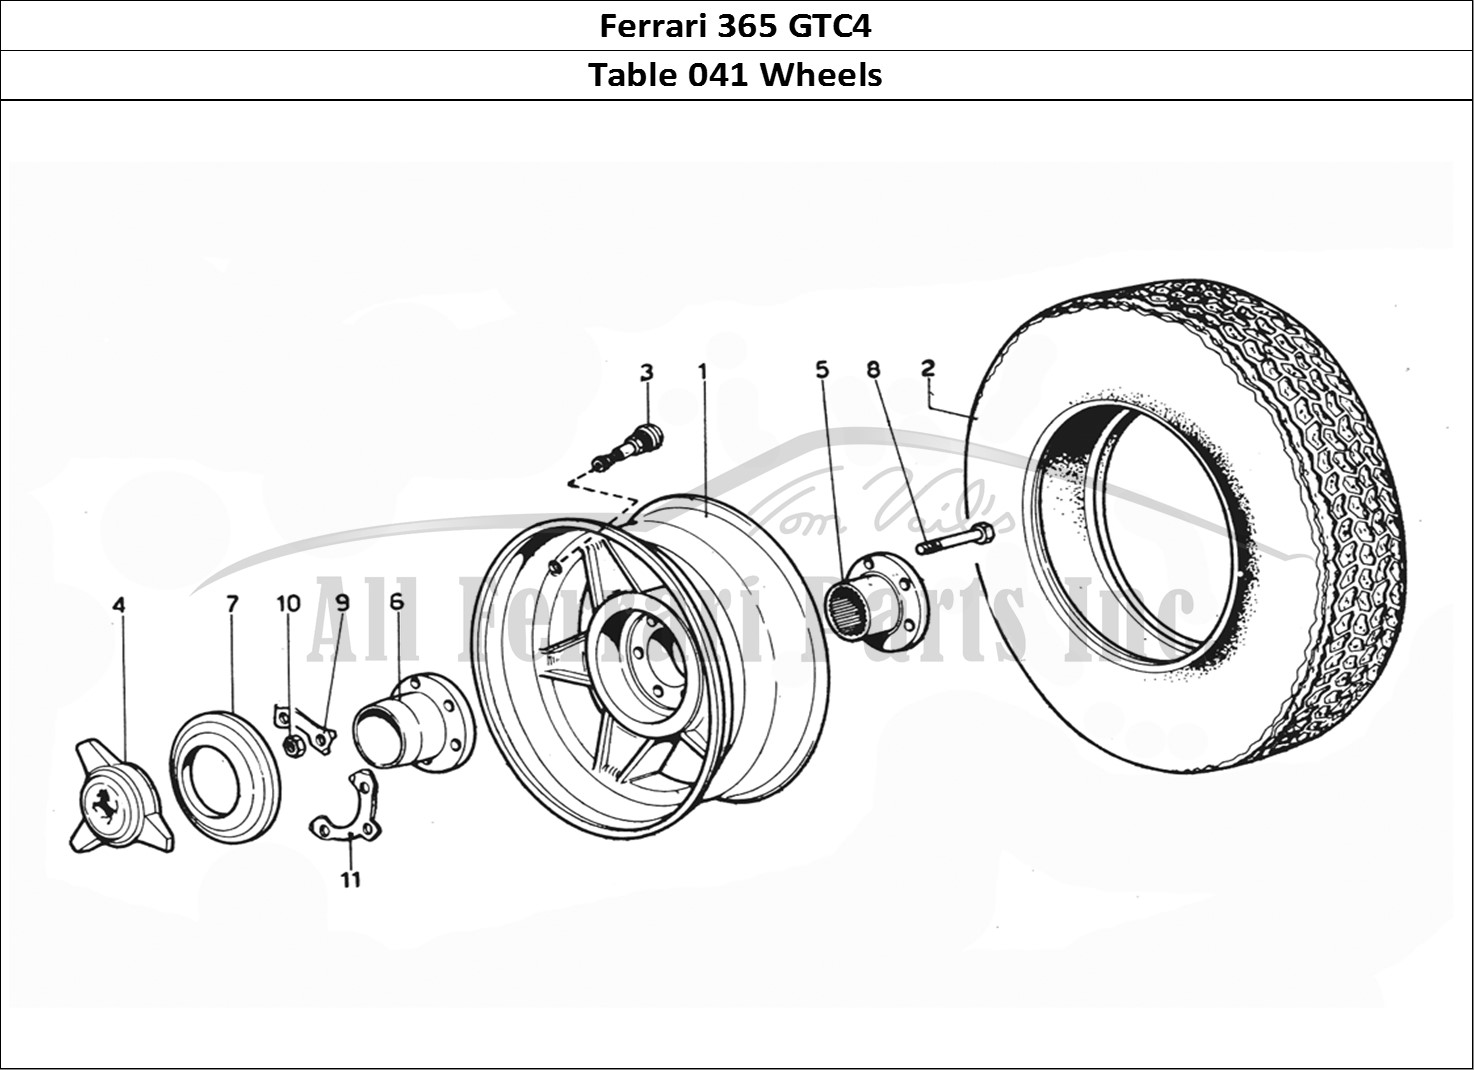 Ferrari Parts Ferrari 365 GTC4 (Mechanical) Page 041 Wheels